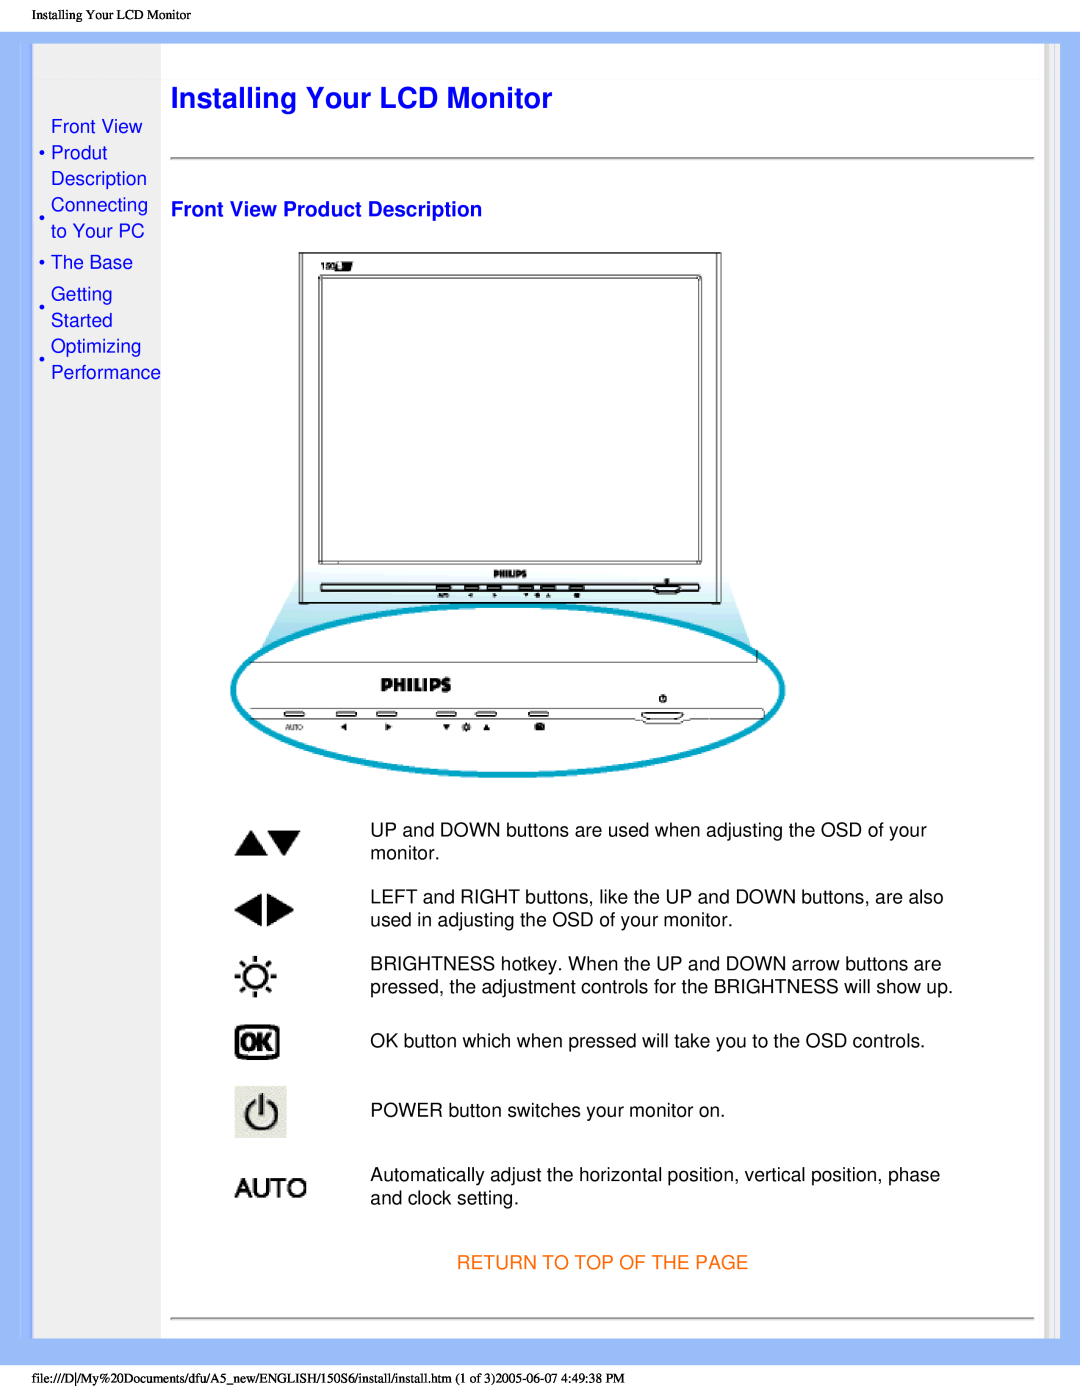 Philips 15056 user manual Installing Your LCD Monitor, Front View Product Description, Front View Produt Description 